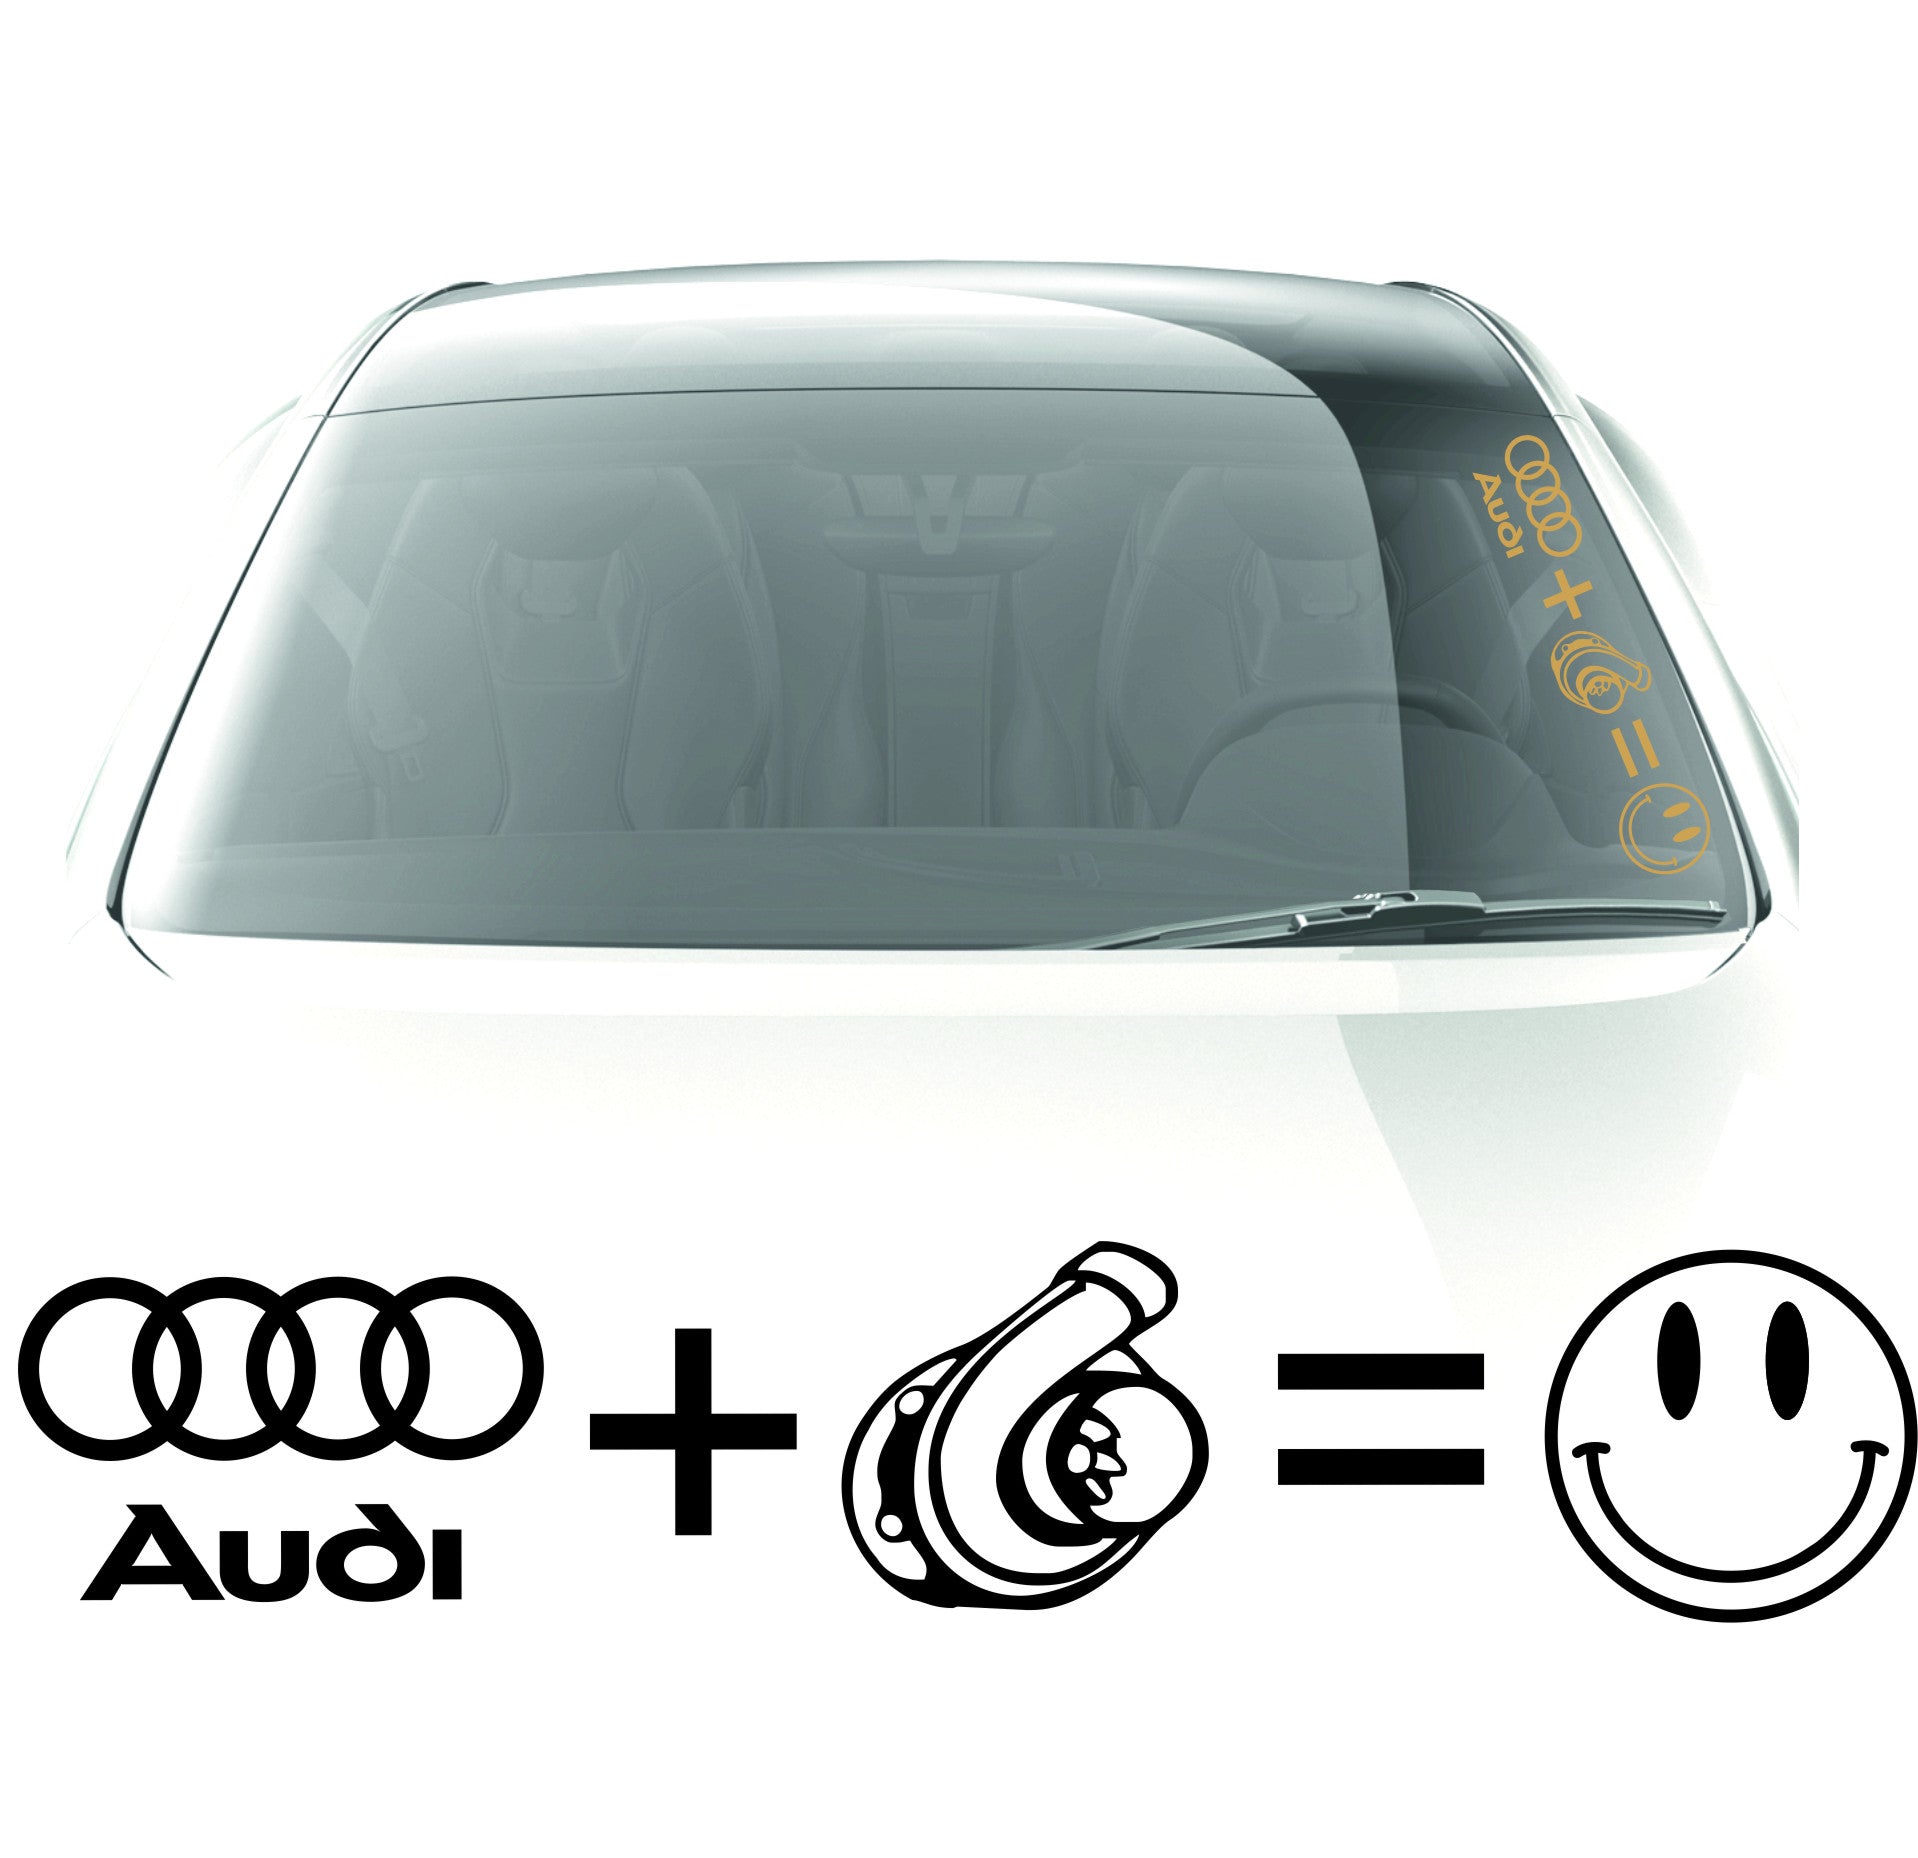 Audi + Turbo sticker – stickyart